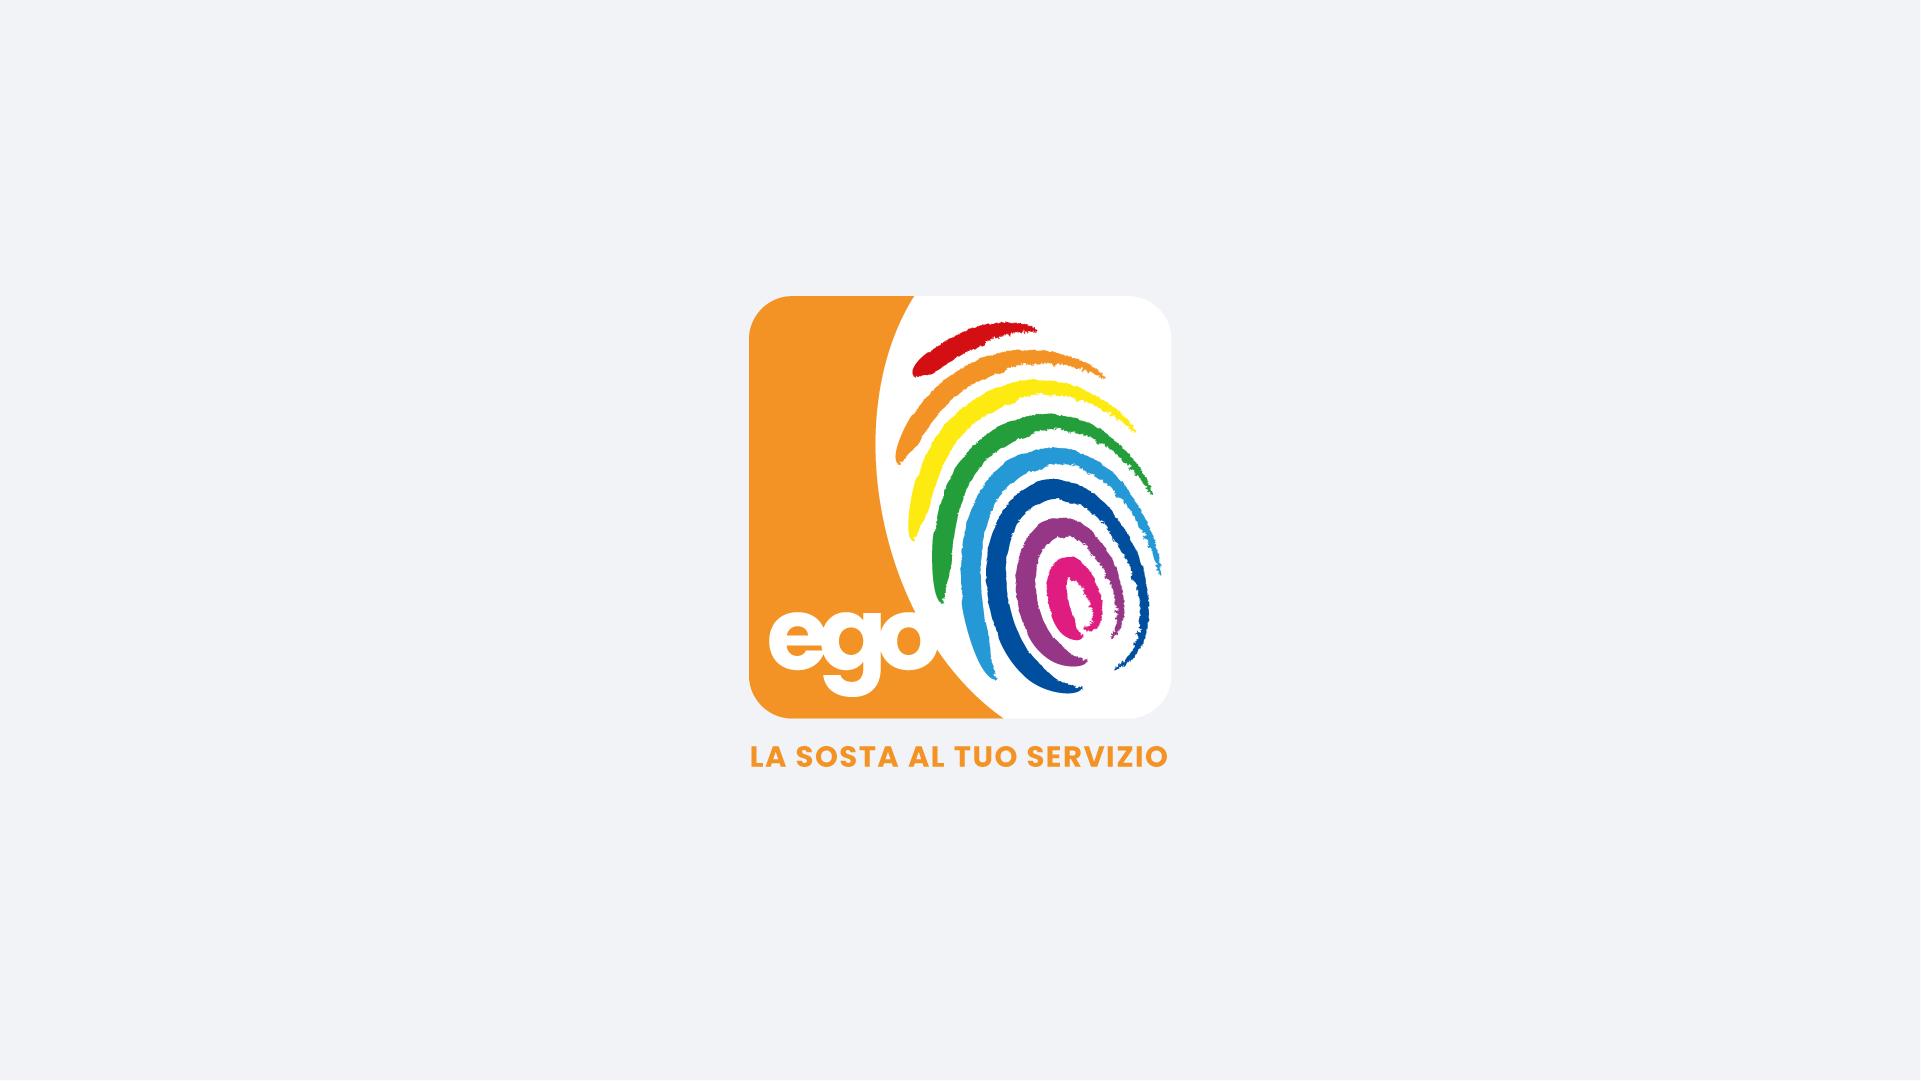 EGO rebranding